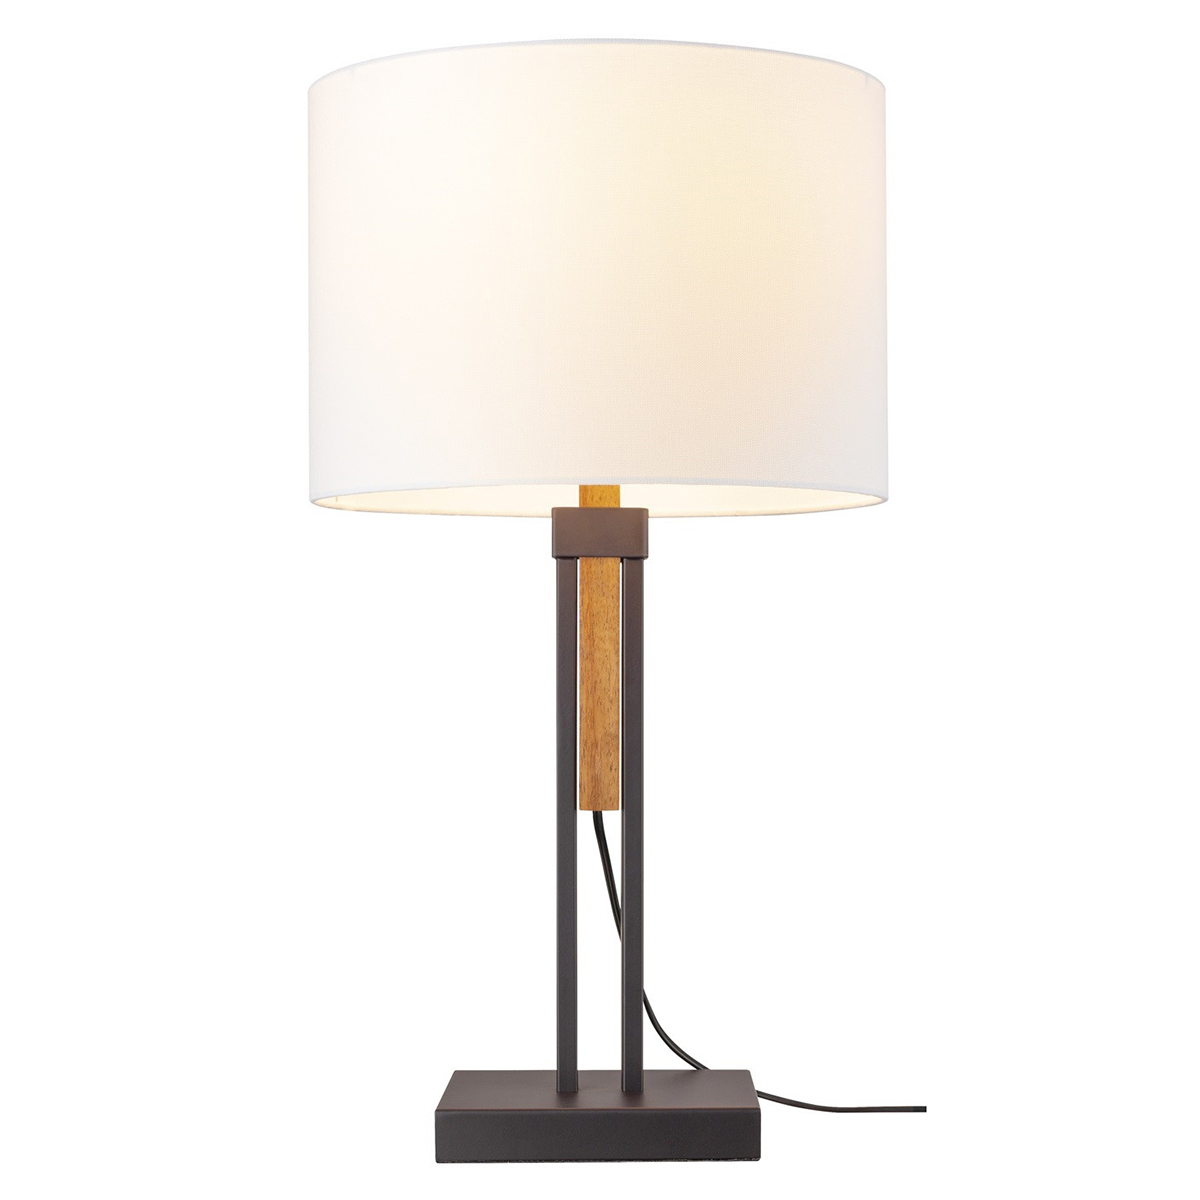 Leon Korol 32in. Faux Wood Table Lamp